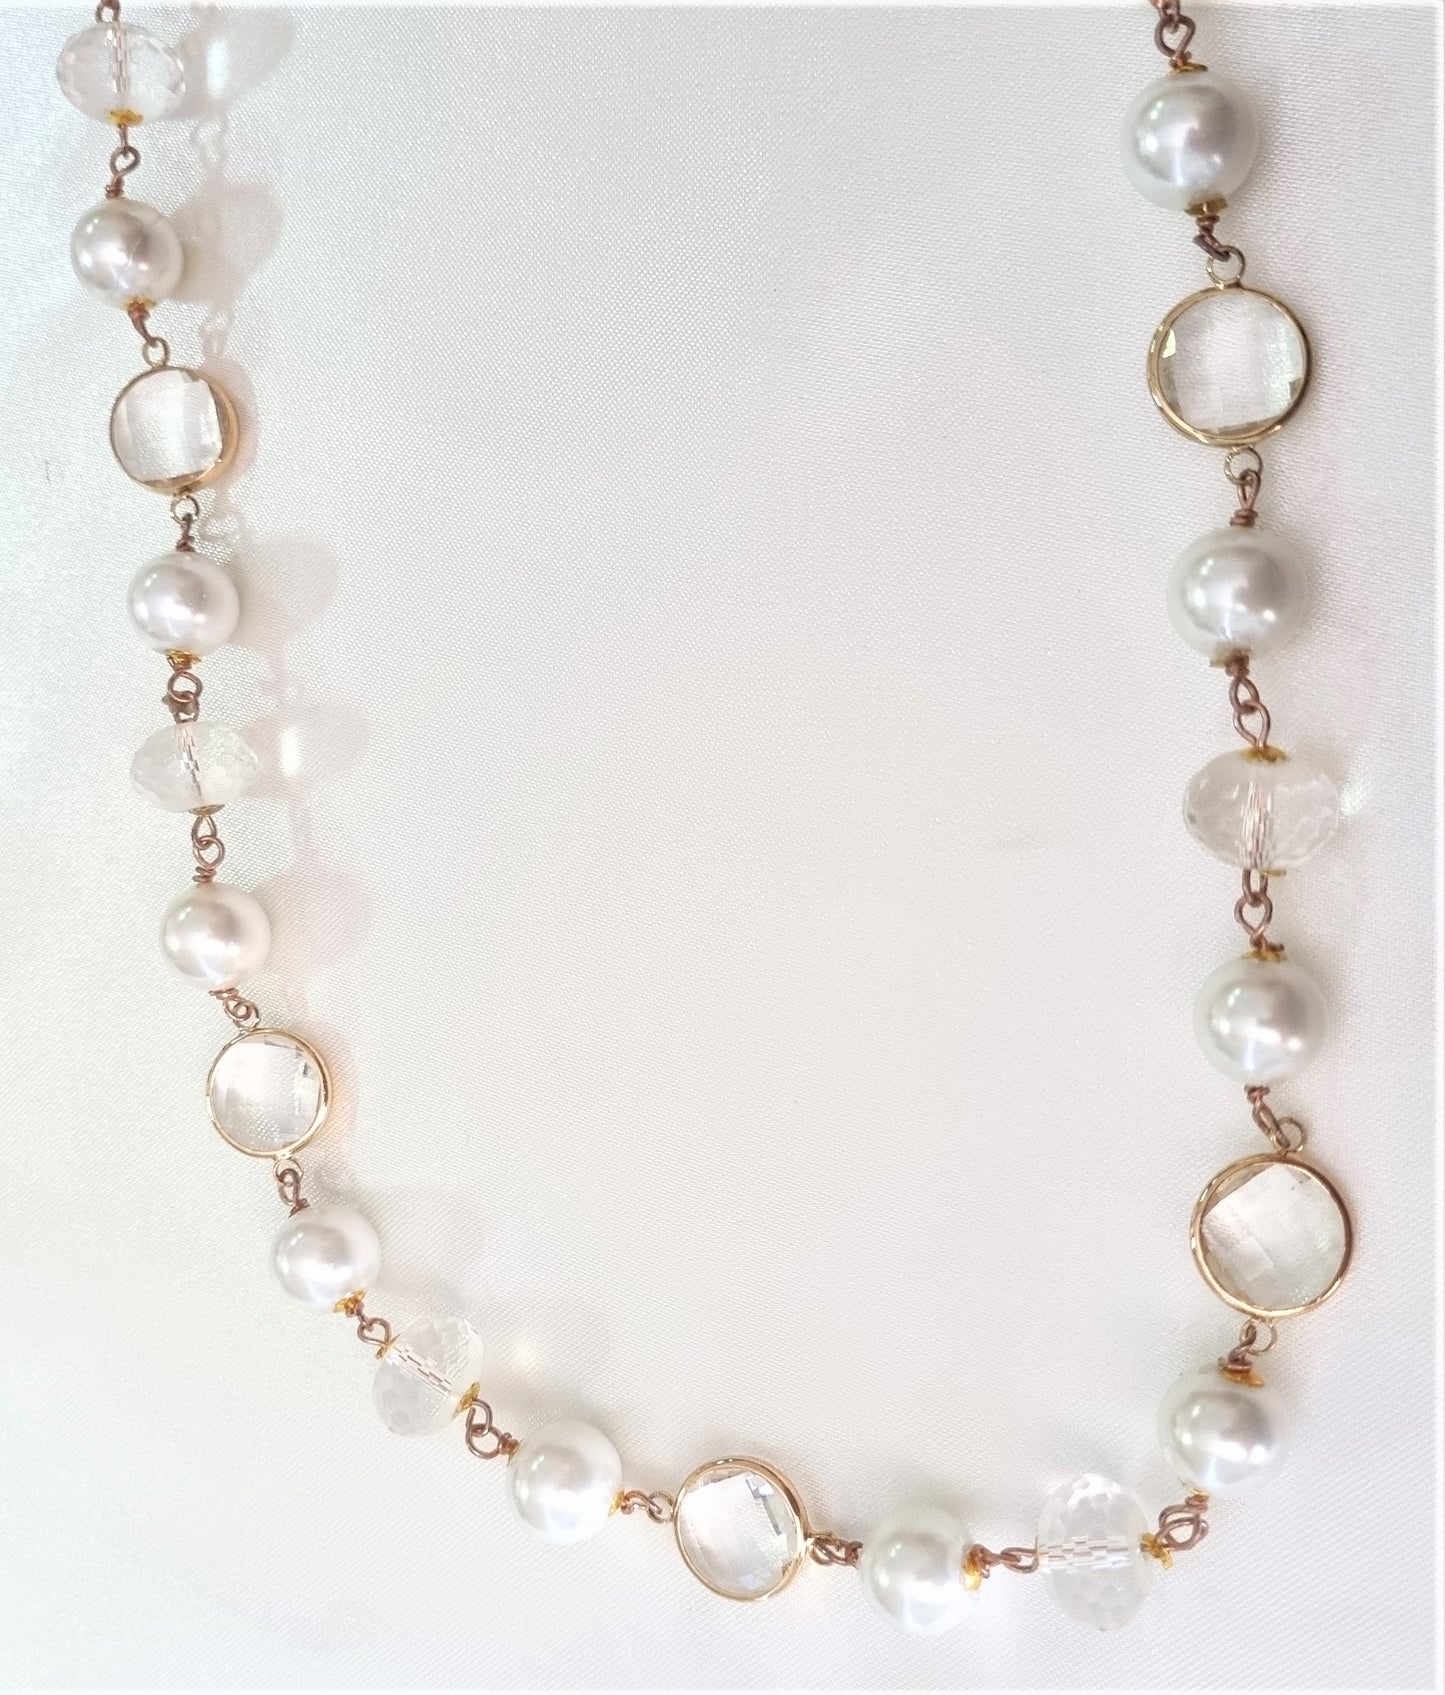 Collana LE PERLE .044 lunga infilata di perle e cristalli incastonati.